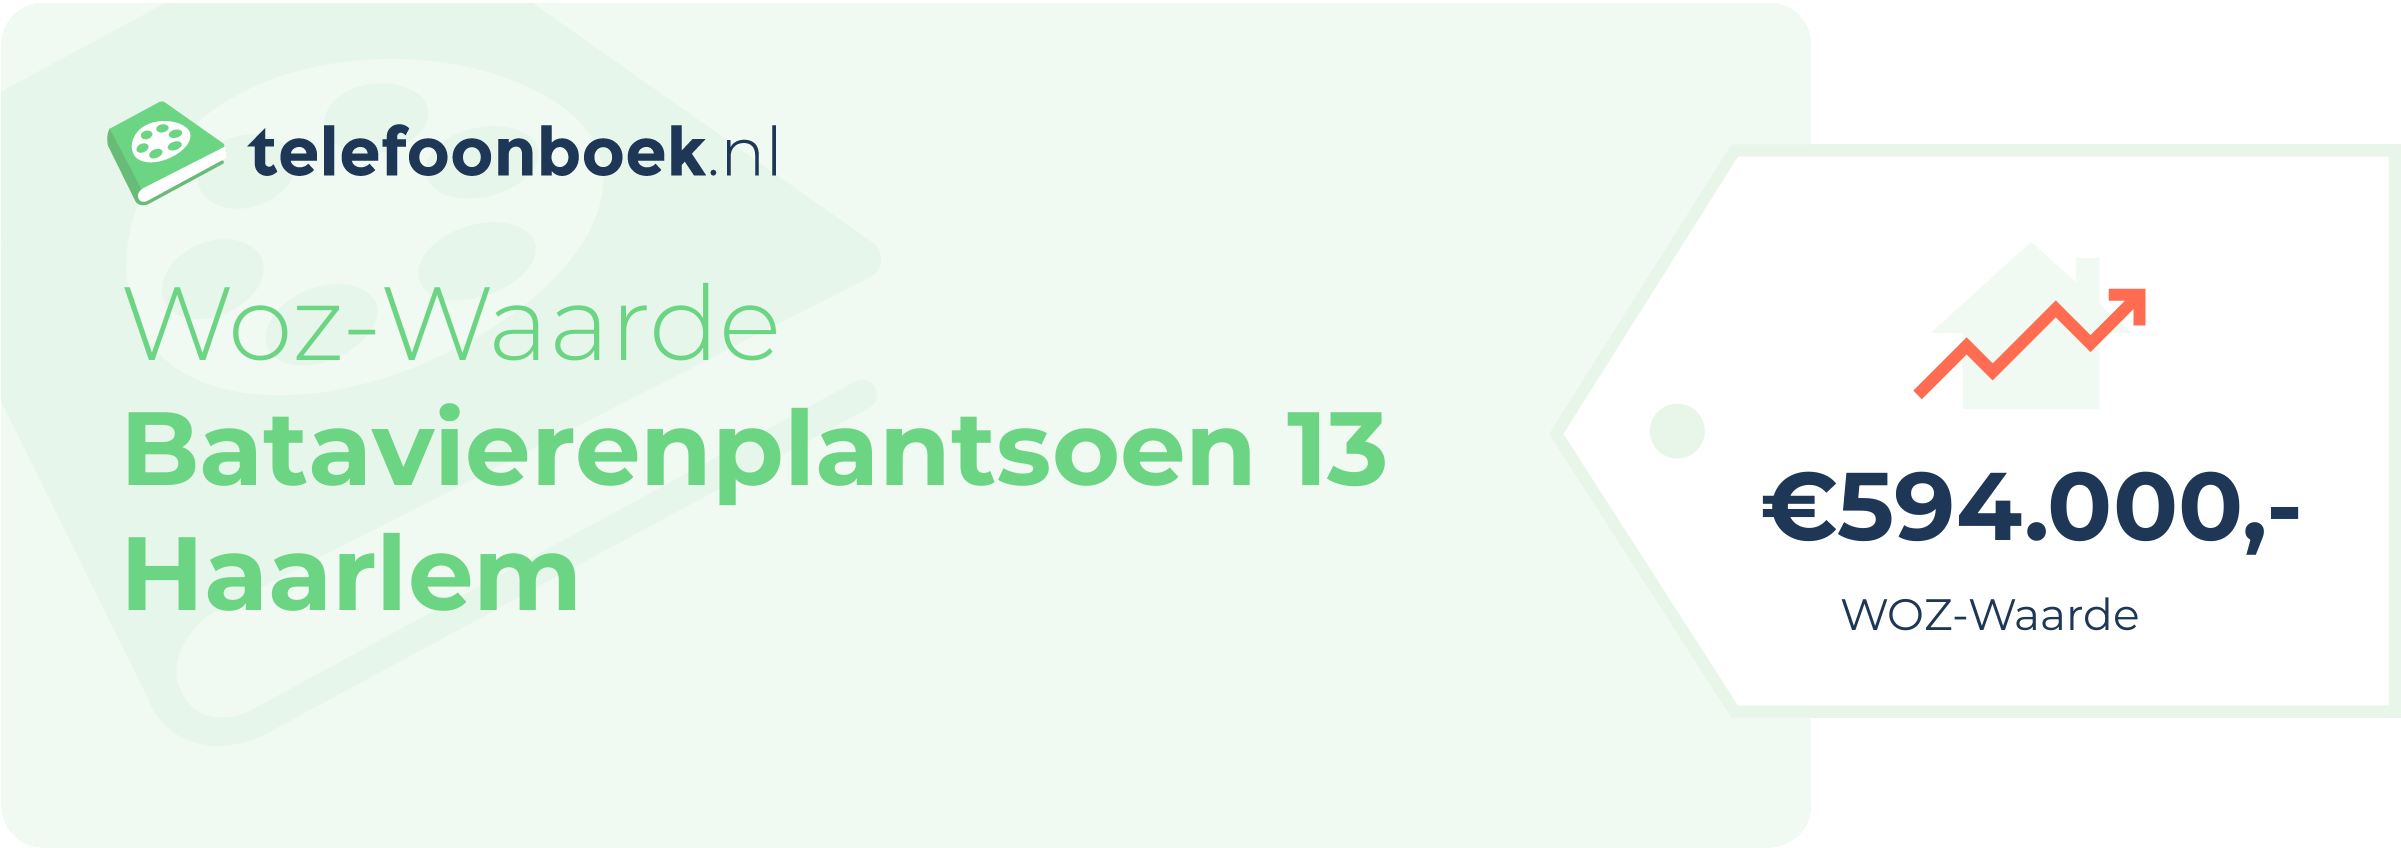 WOZ-waarde Batavierenplantsoen 13 Haarlem